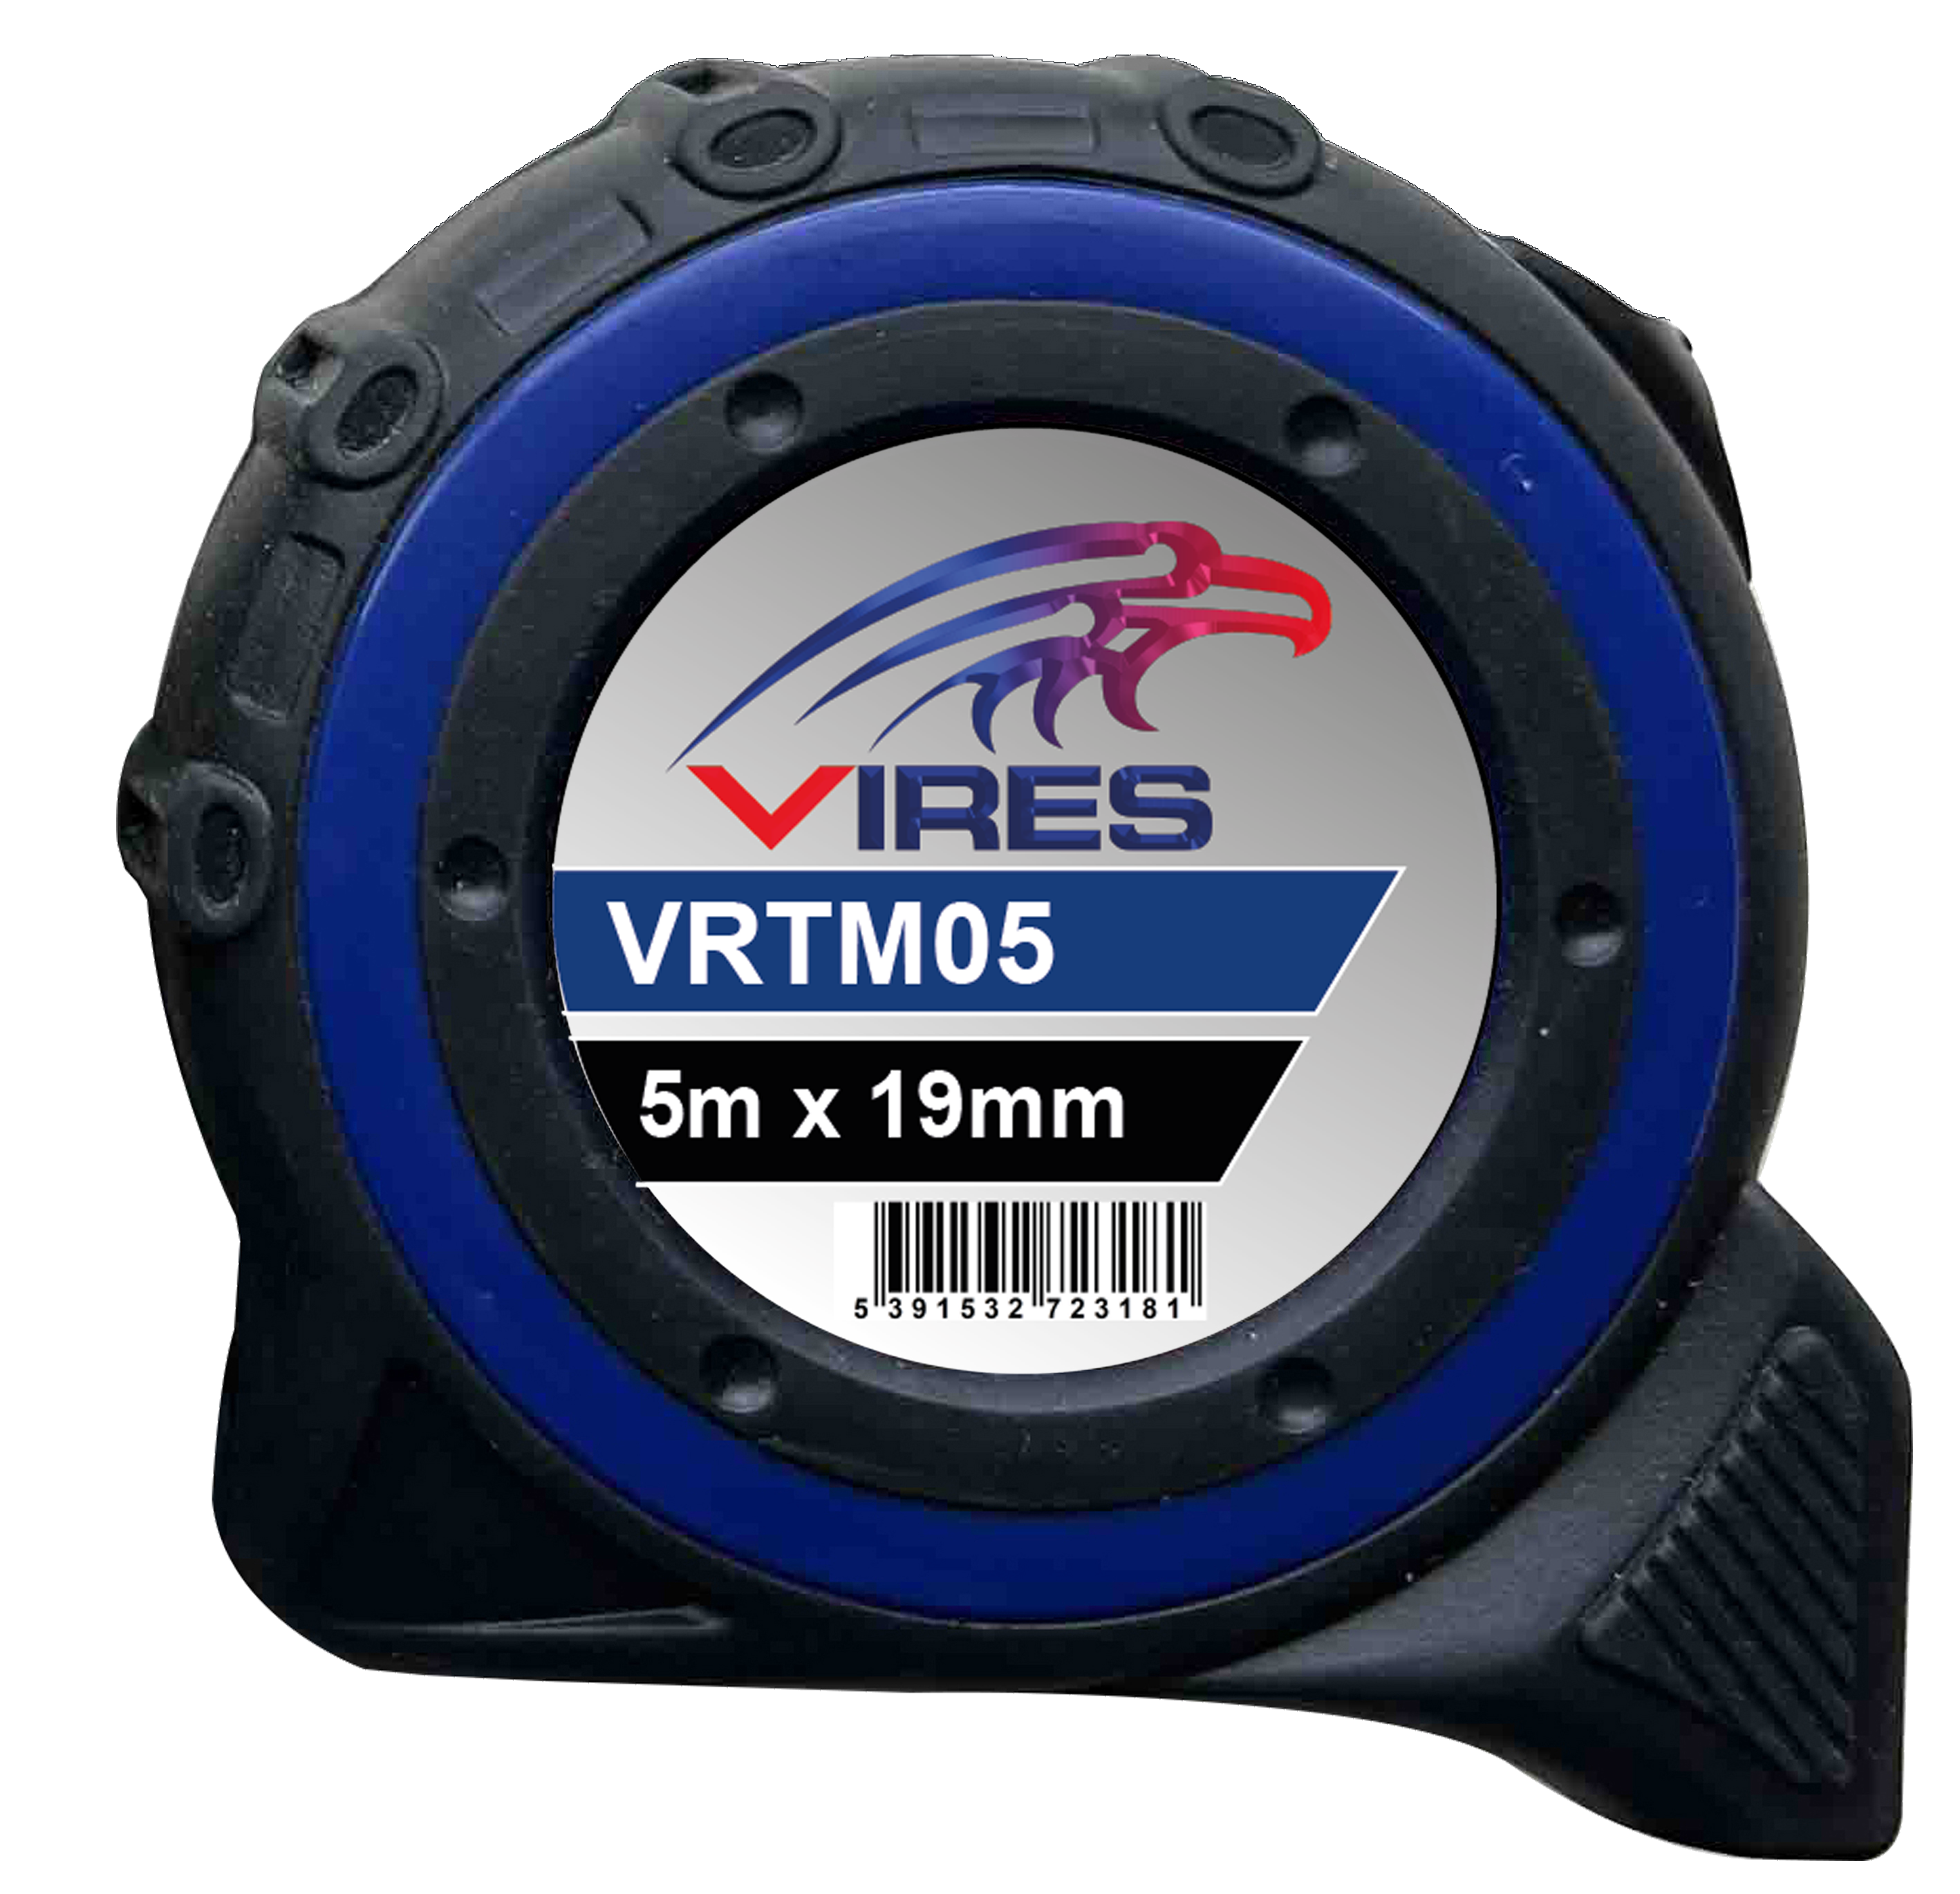 Vires VRTM45 Professional Tape Measure 5.0m x 19mm